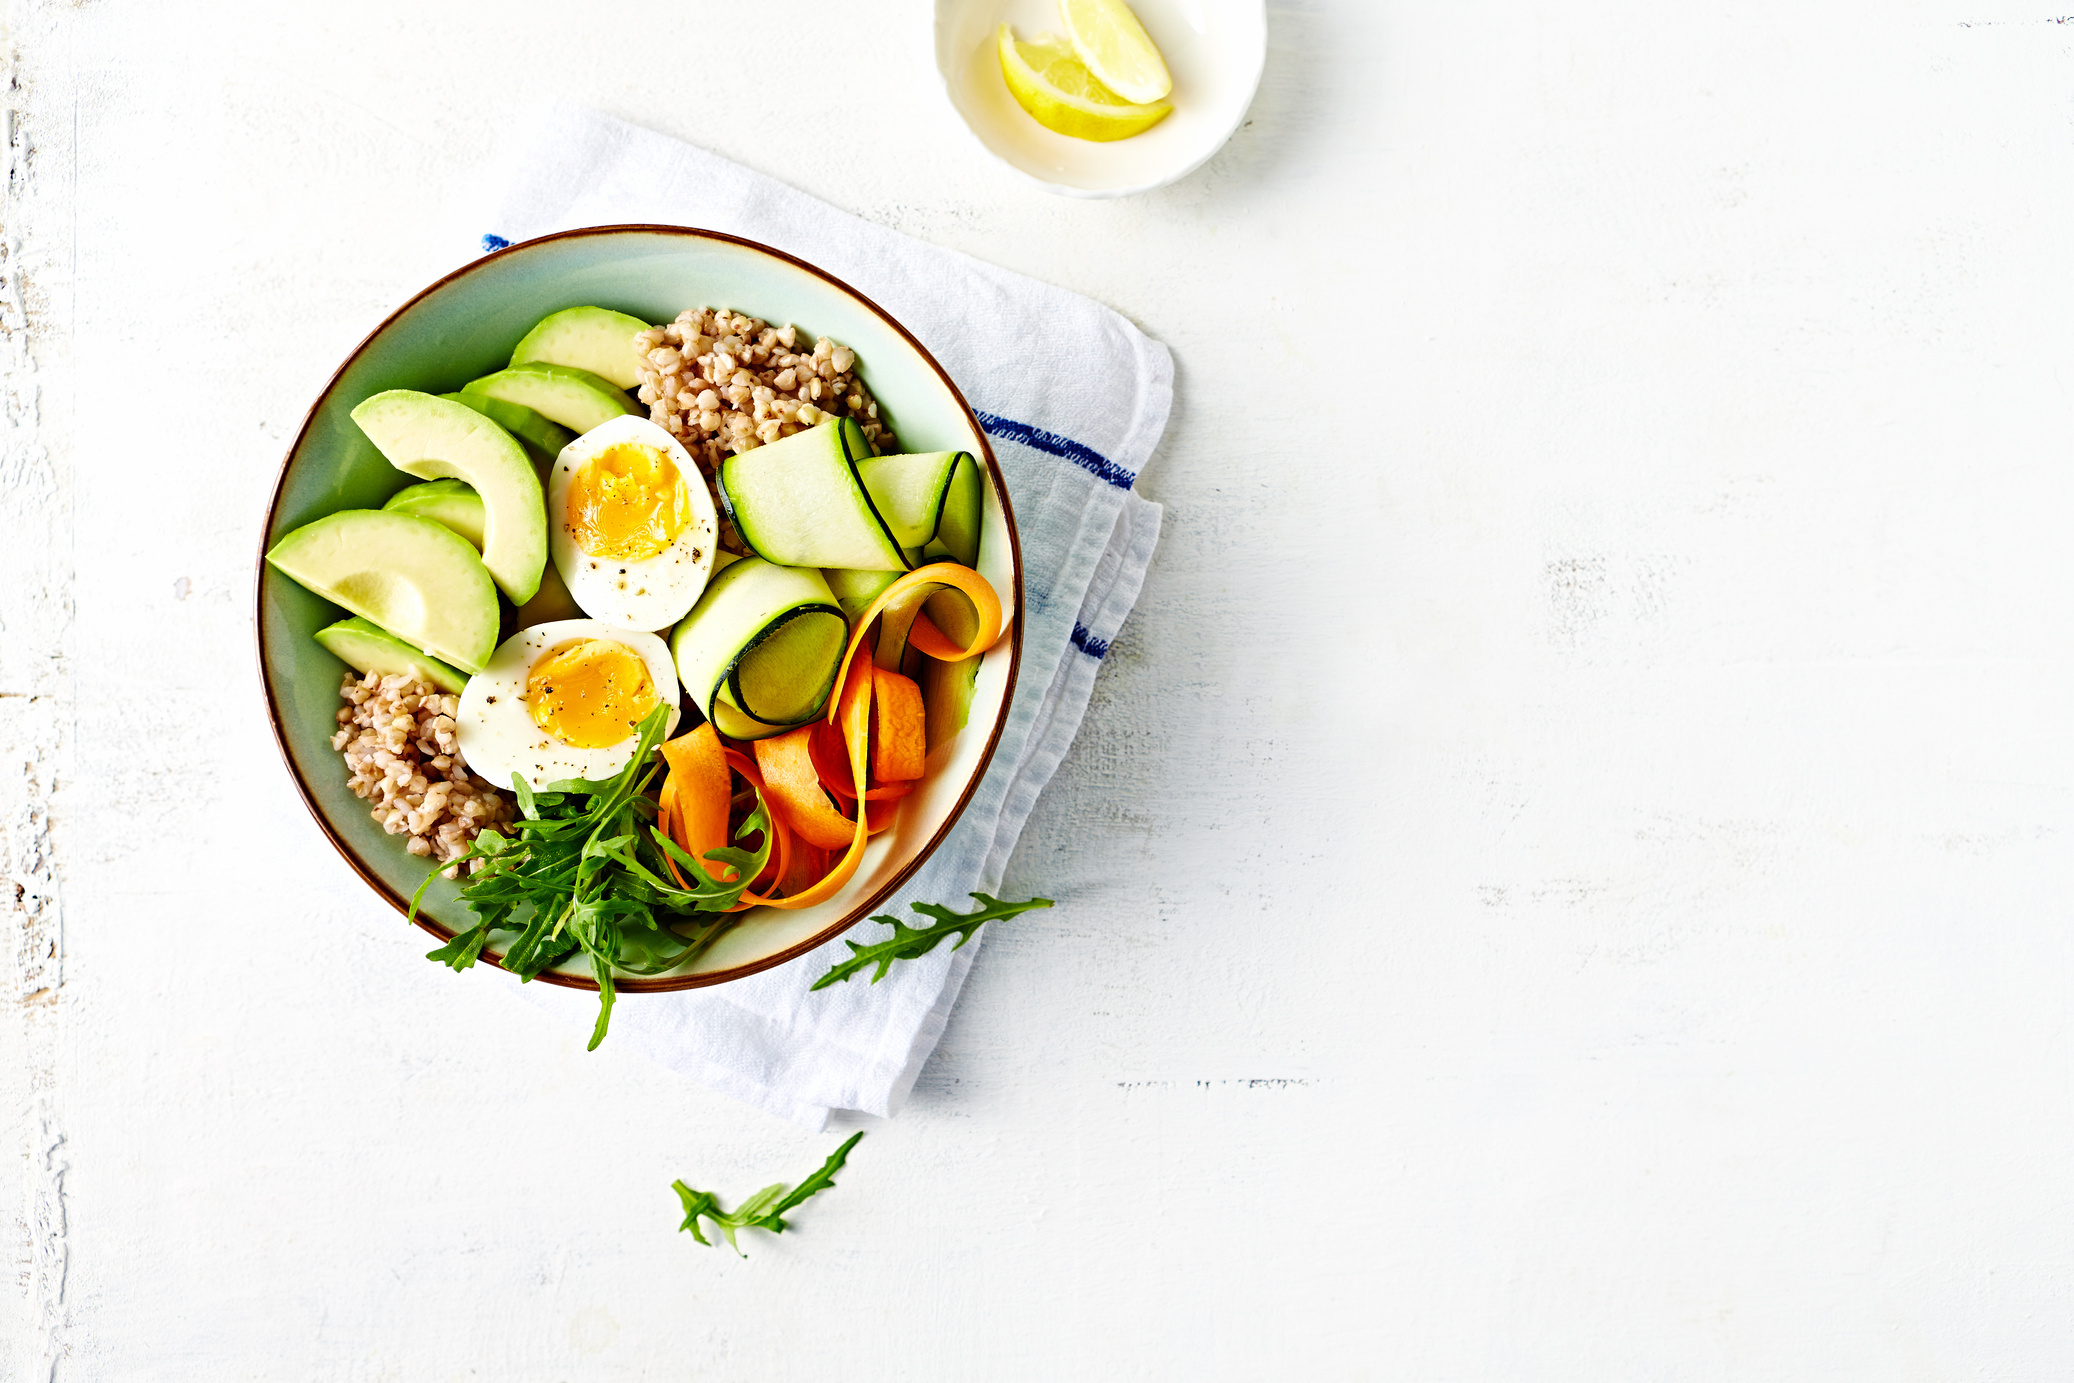 Nourishing bowl of vegetables with egg, avocado and buckwheat